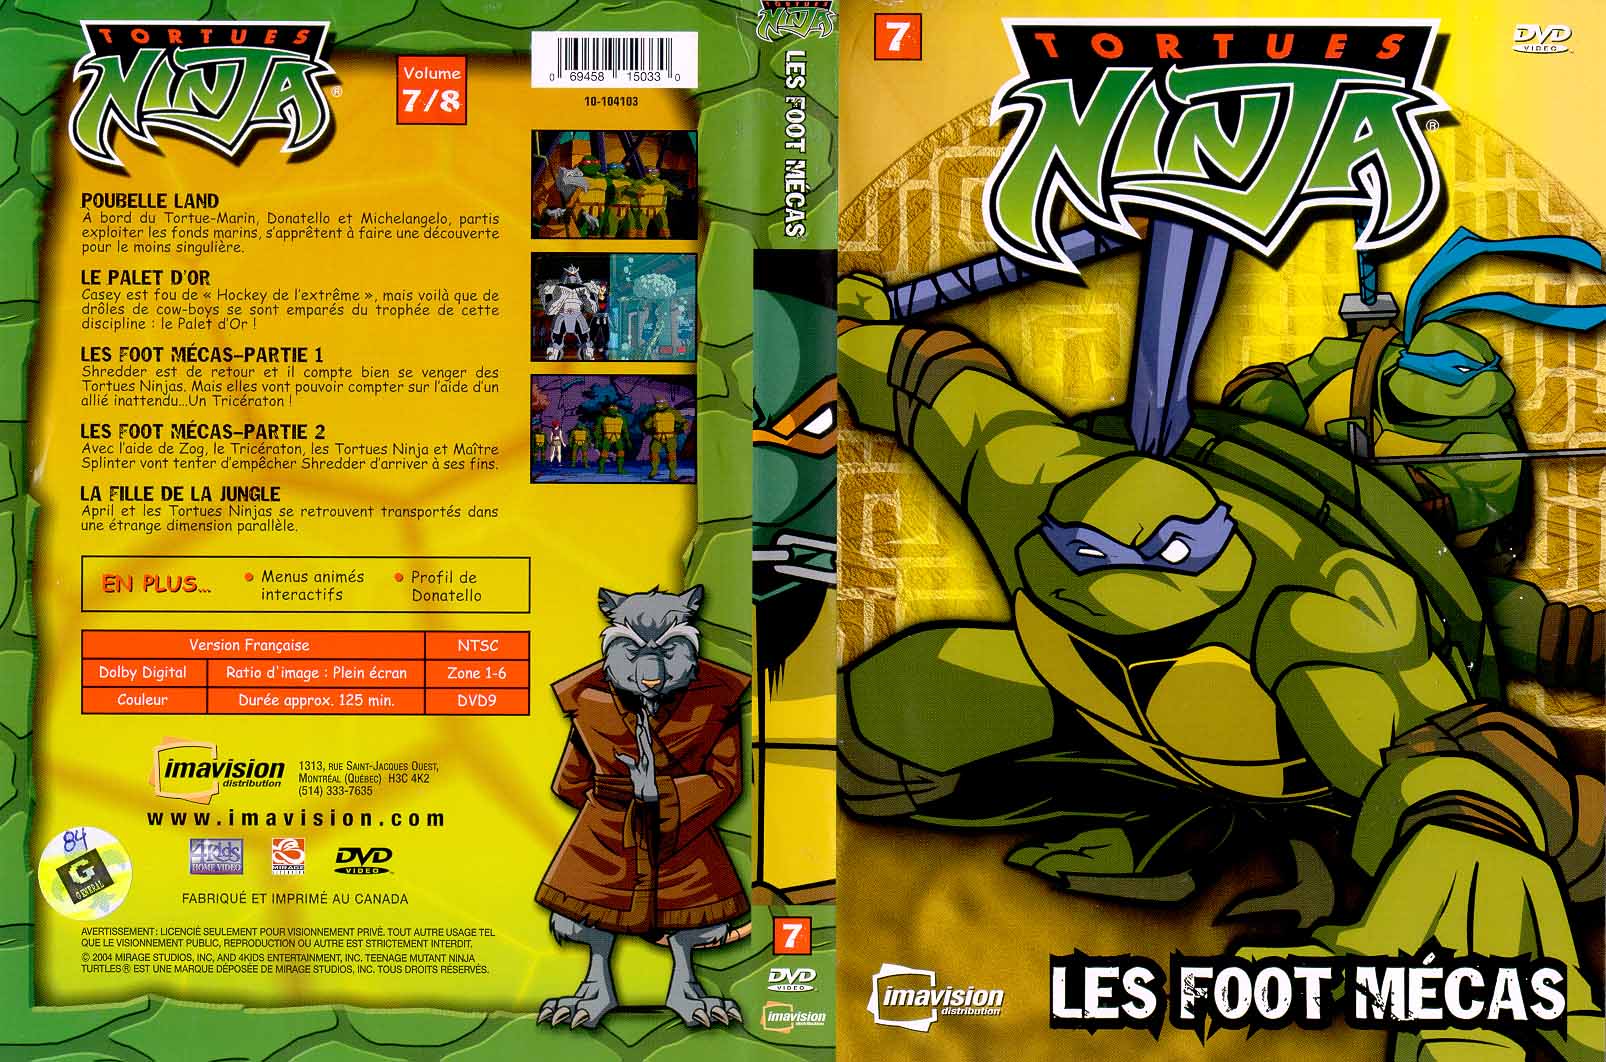 Jaquette DVD Tortues Ninja vol 7